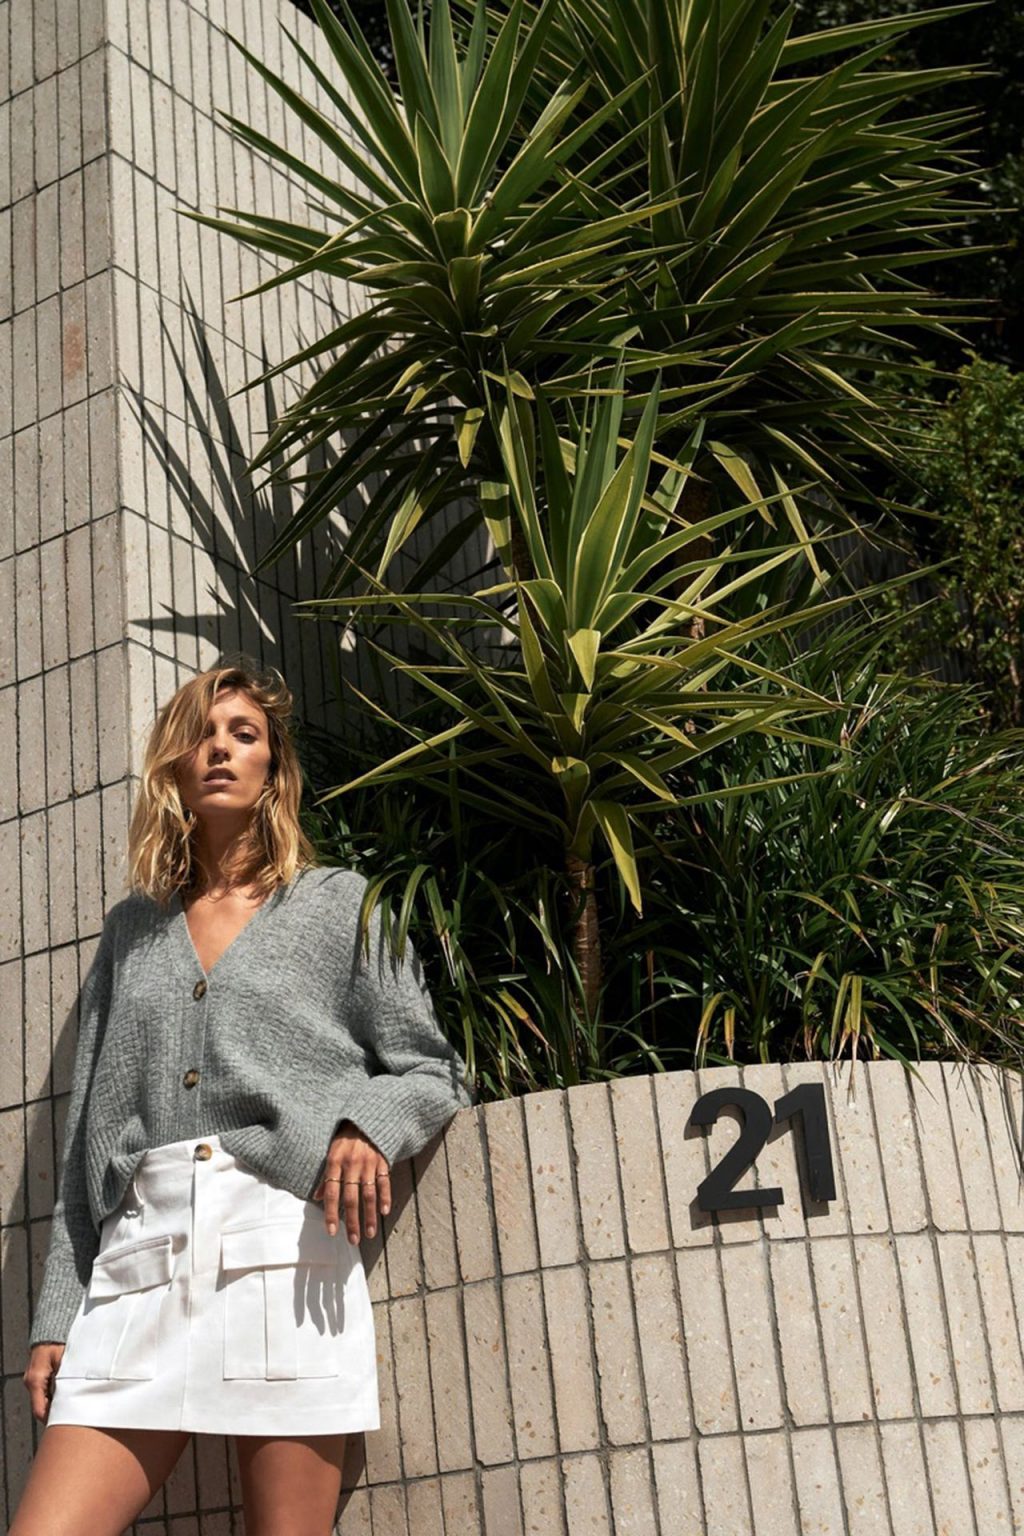 Anja Rubik Poses for the Autumn 2020 Collection of the Spanish Brand Zara (14 Photos)